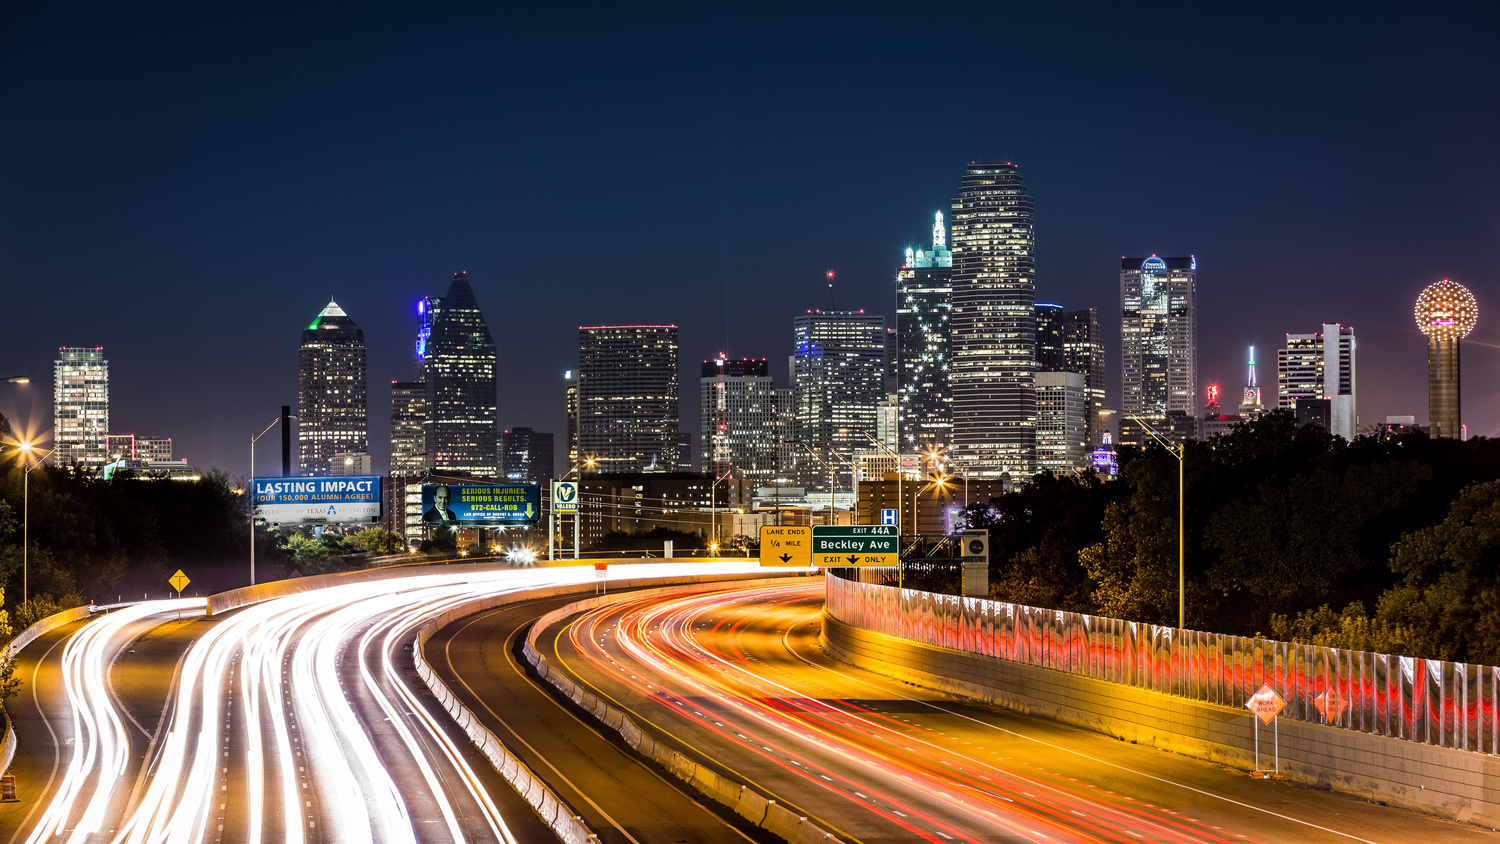 The Dallas skyline at night on E I-30